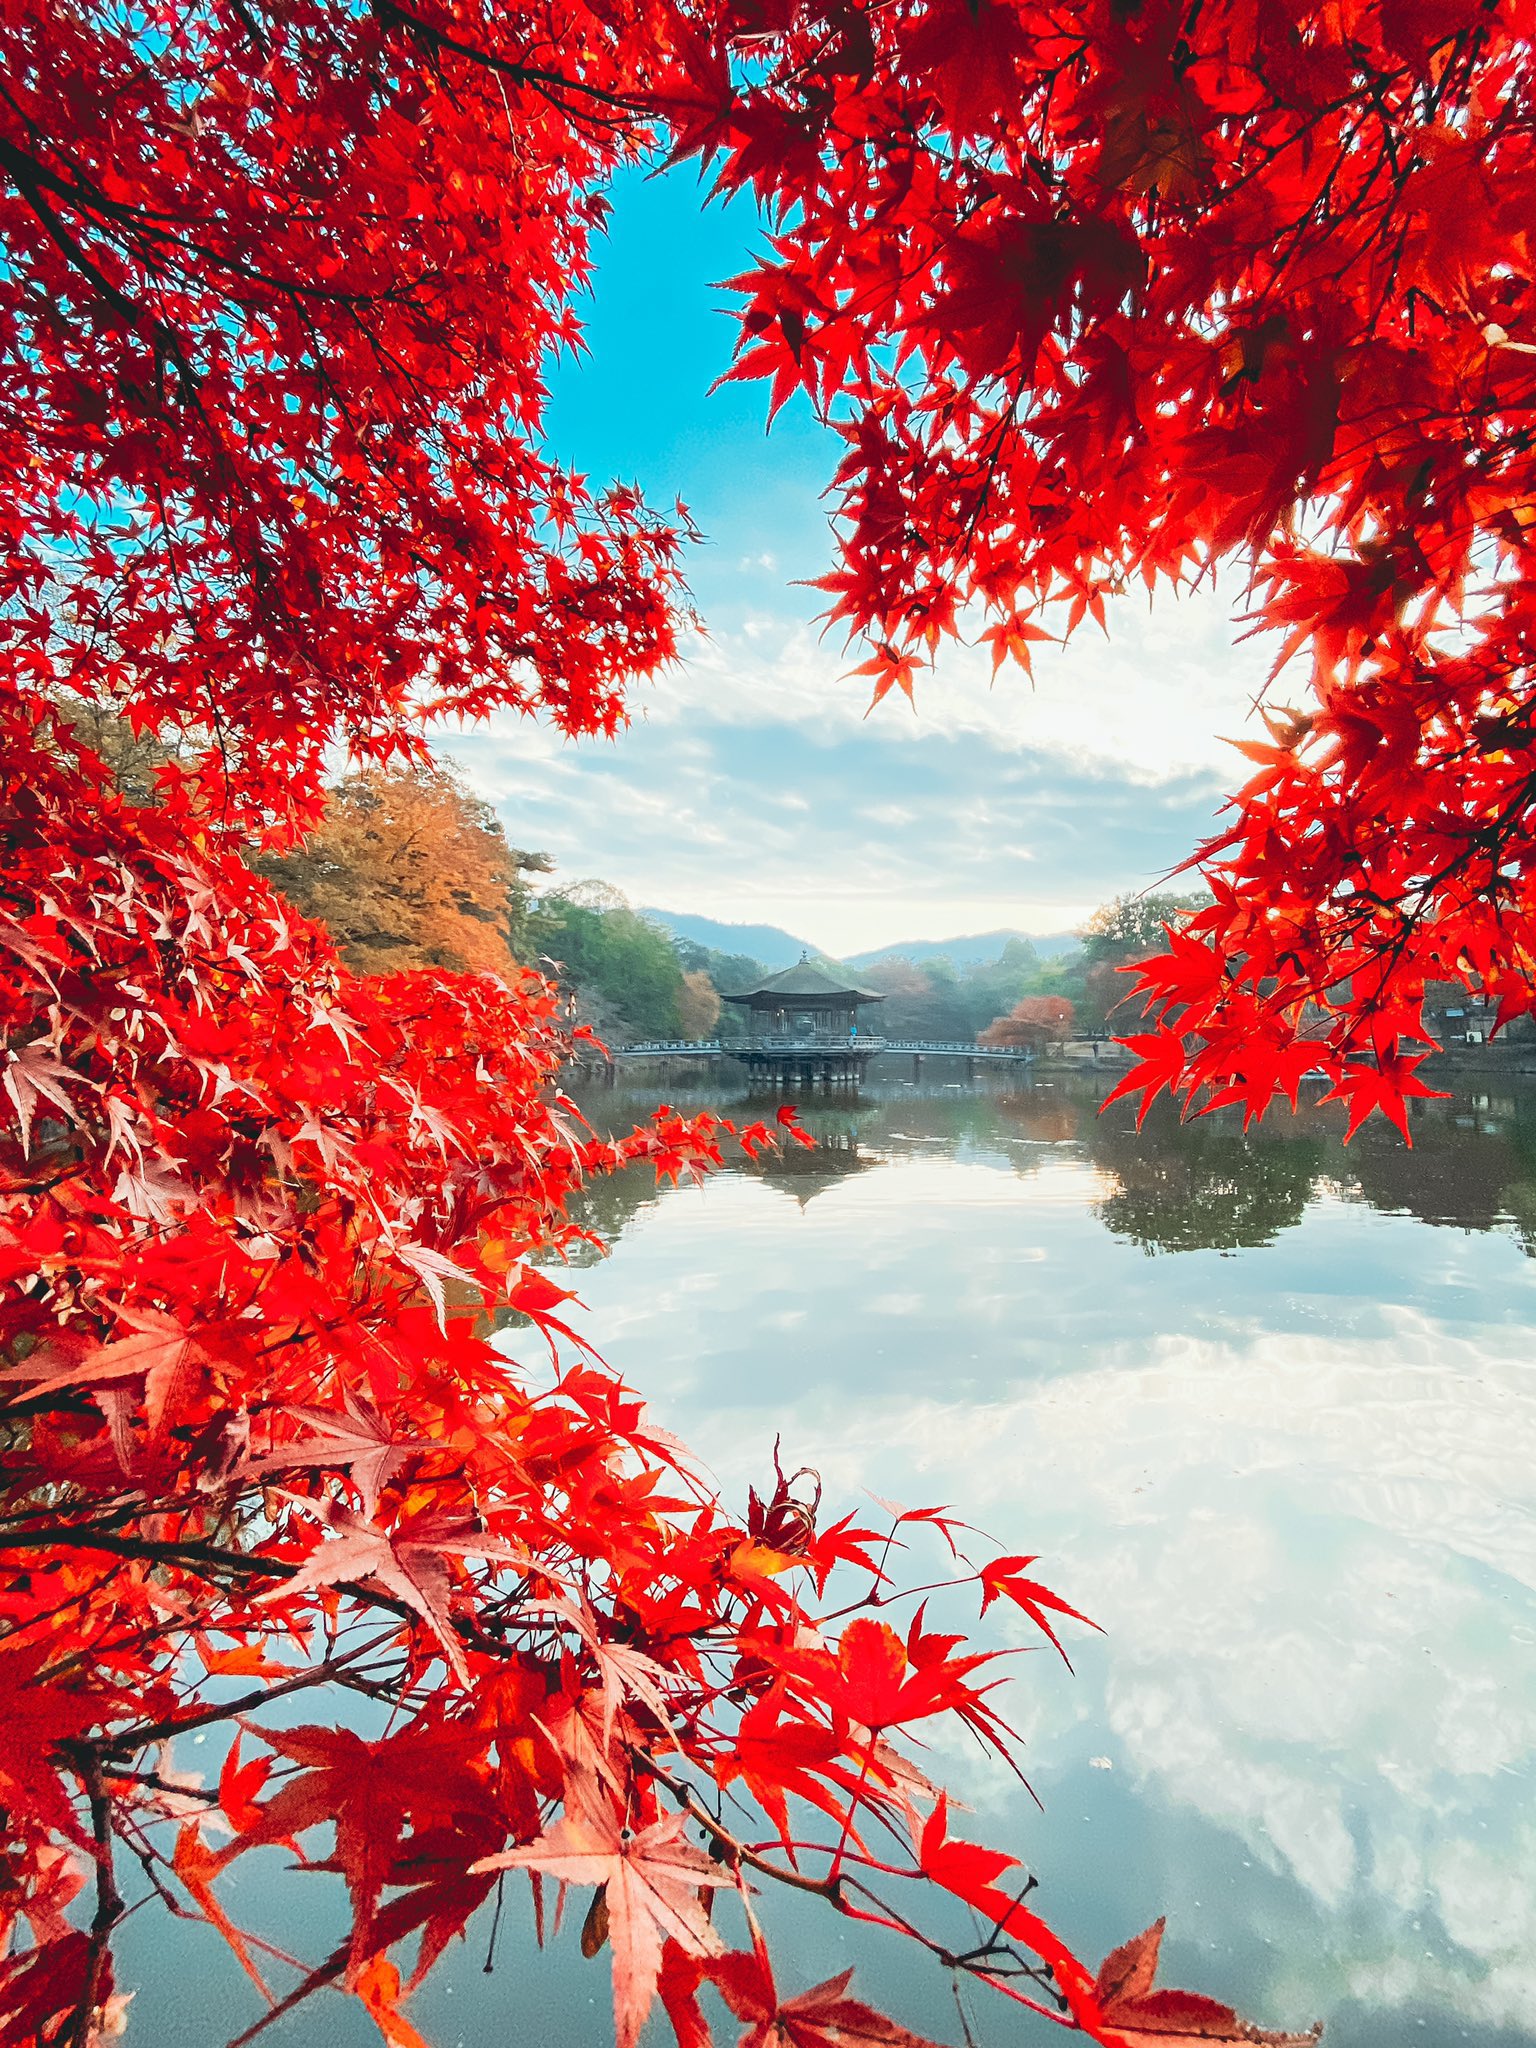 Shota 今年も楽しみな紅葉と浮見堂の景色 T Co Evu4gomxnh Twitter